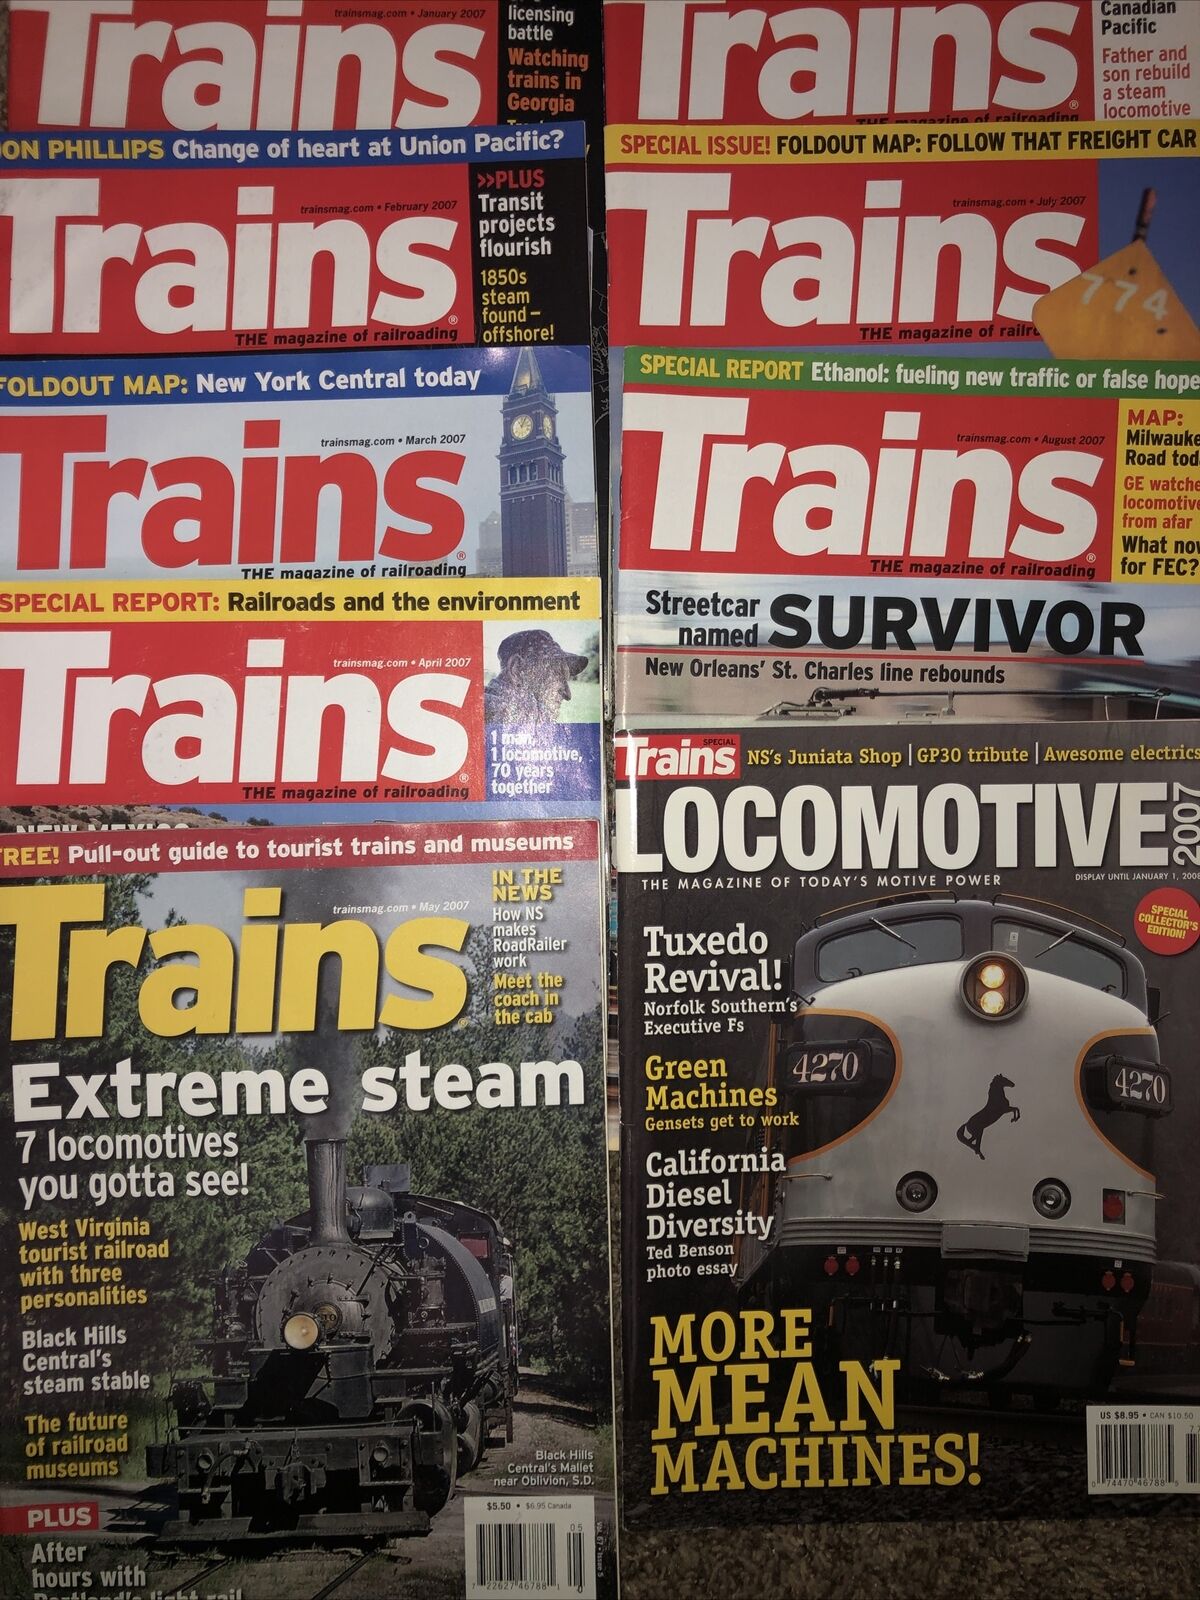 Trains 2007 Magazine 9 Issues Jan Feb March Apr May June July Aug Locomotive Edi